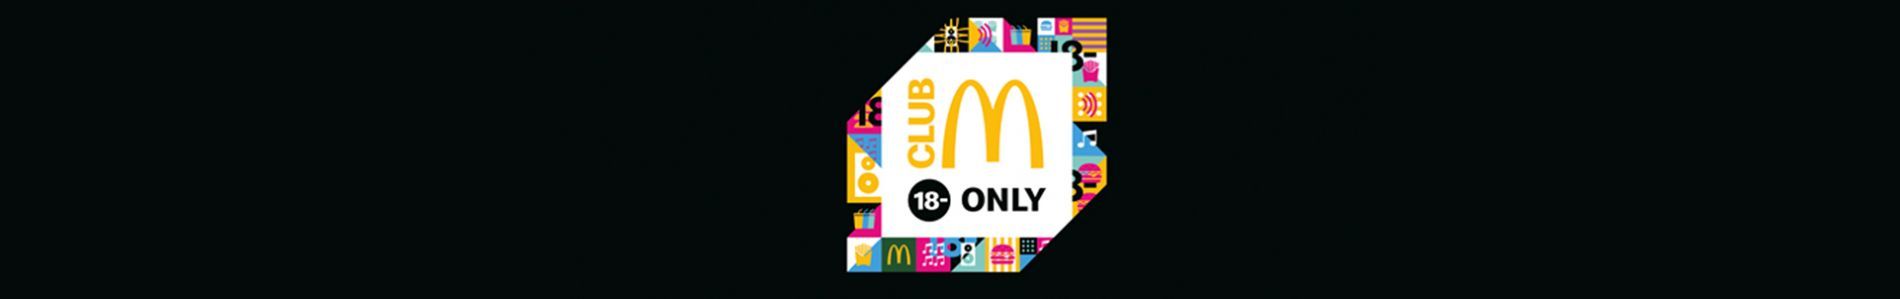 Spinnin' Records x McDonald's presents: Club McDonald's